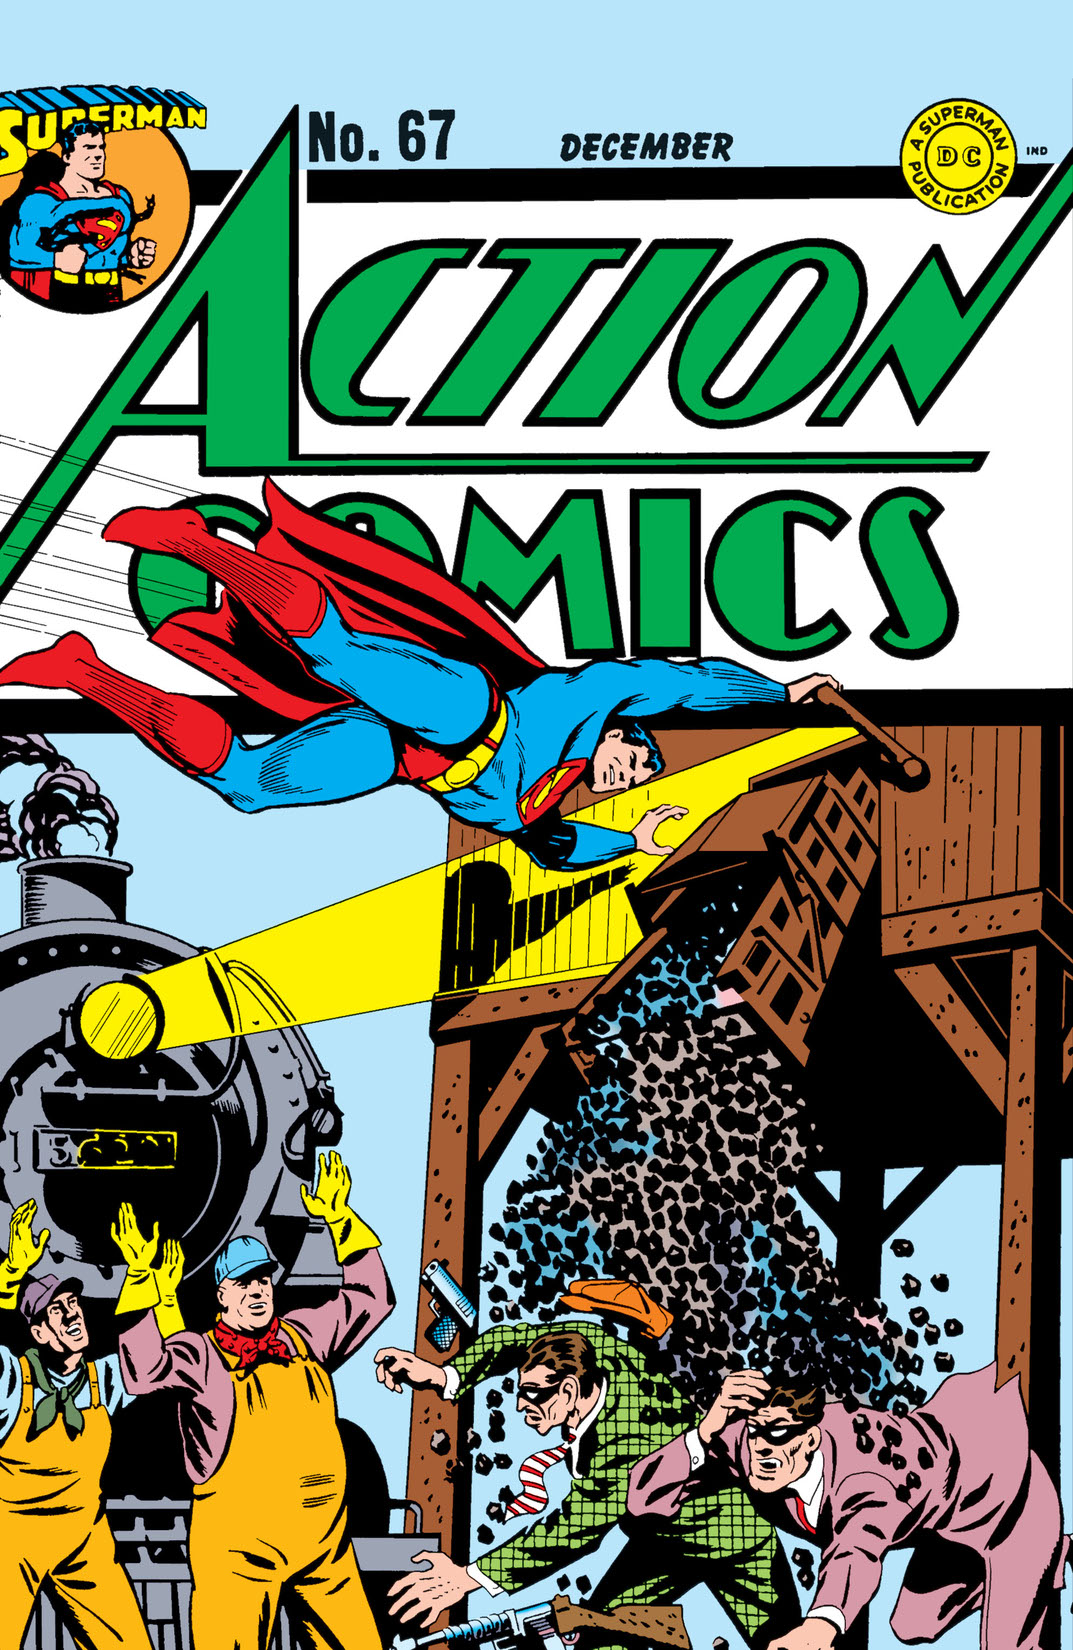 Action Comics (1938-) #67 preview images